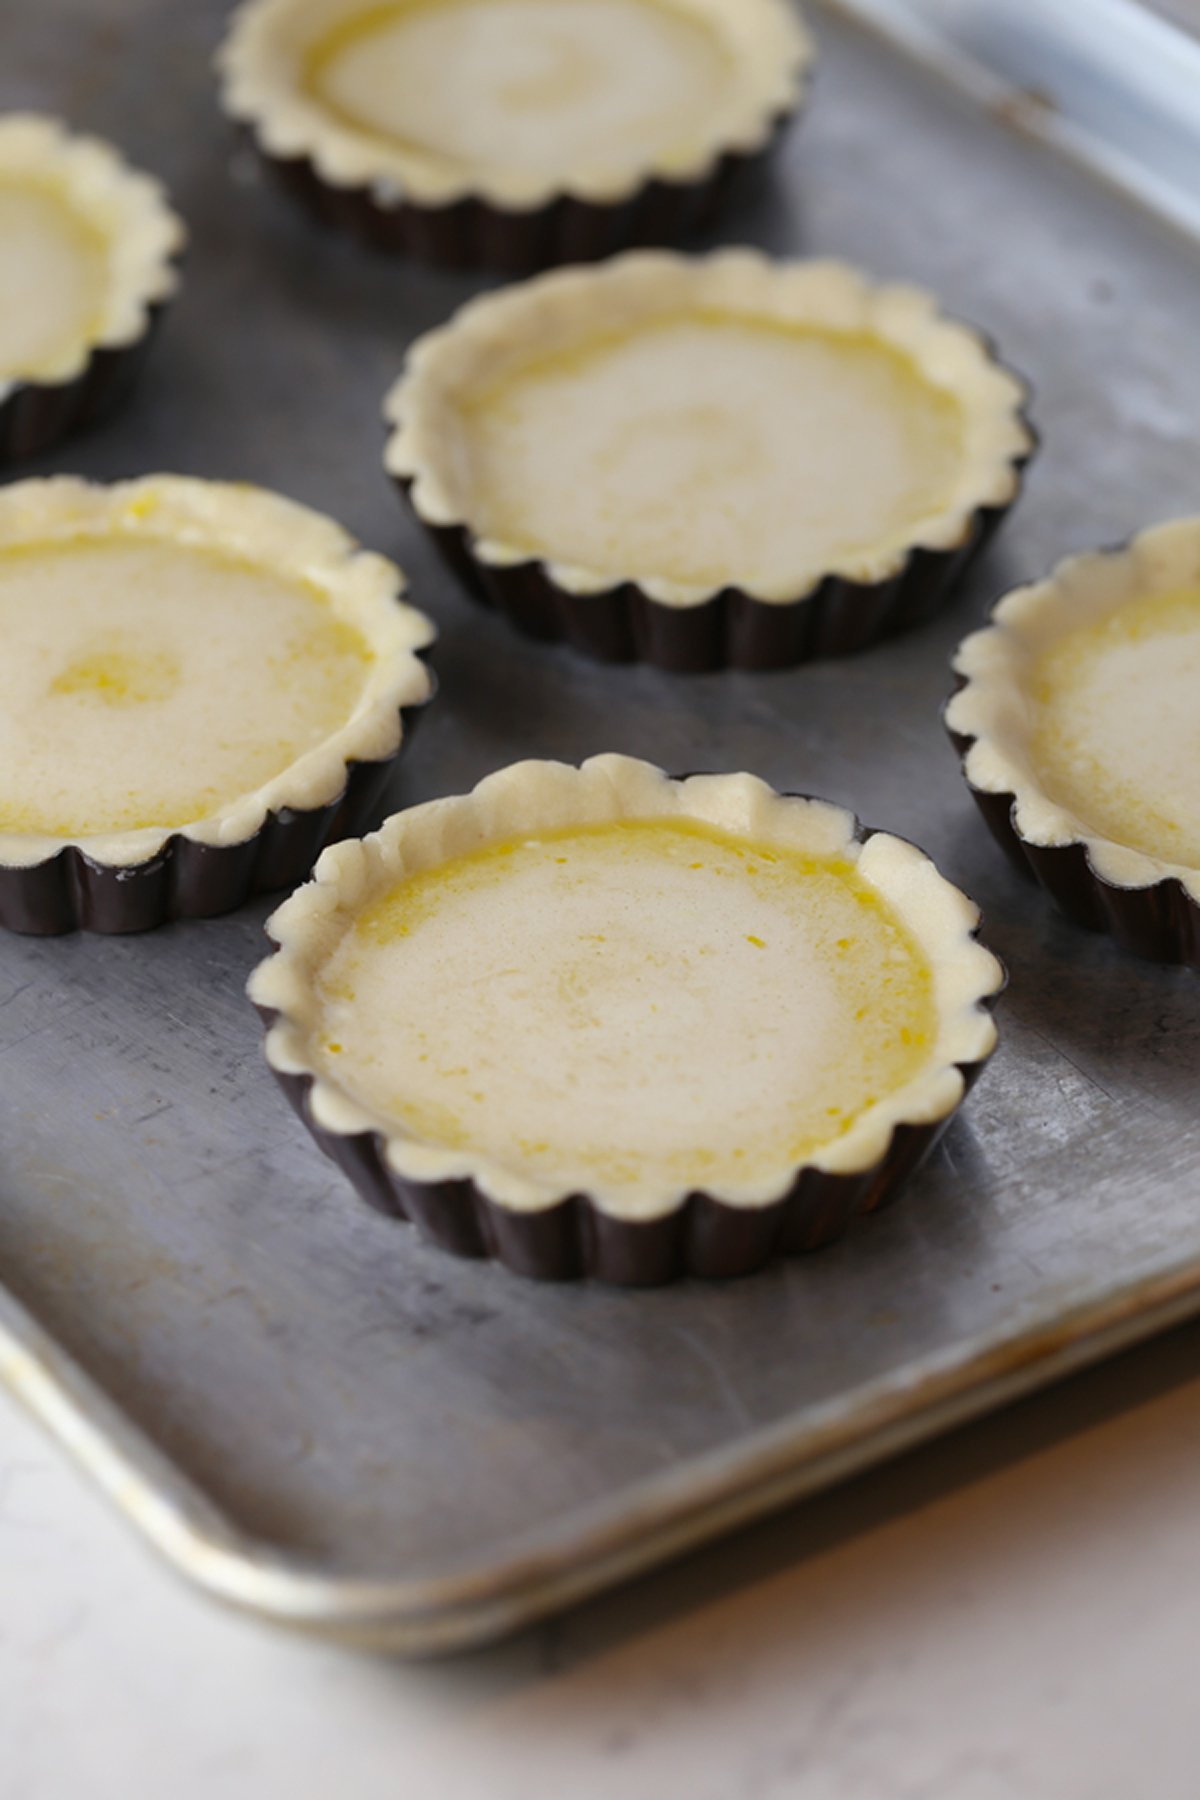 Mini tart crusts filled with lemon curd filling.